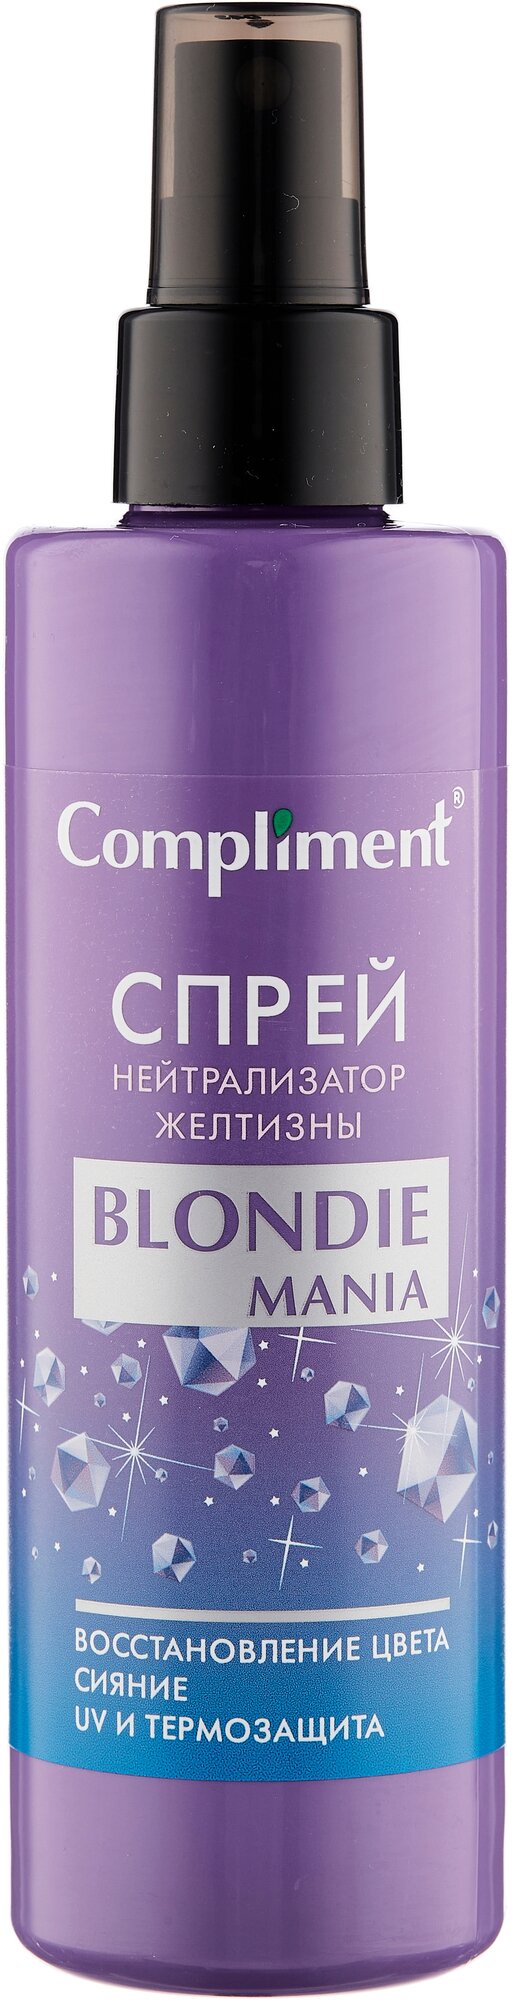 Compliment Blondie Mania Спрей для волос Нейтрализатор желтизны, 200 мл, спрей